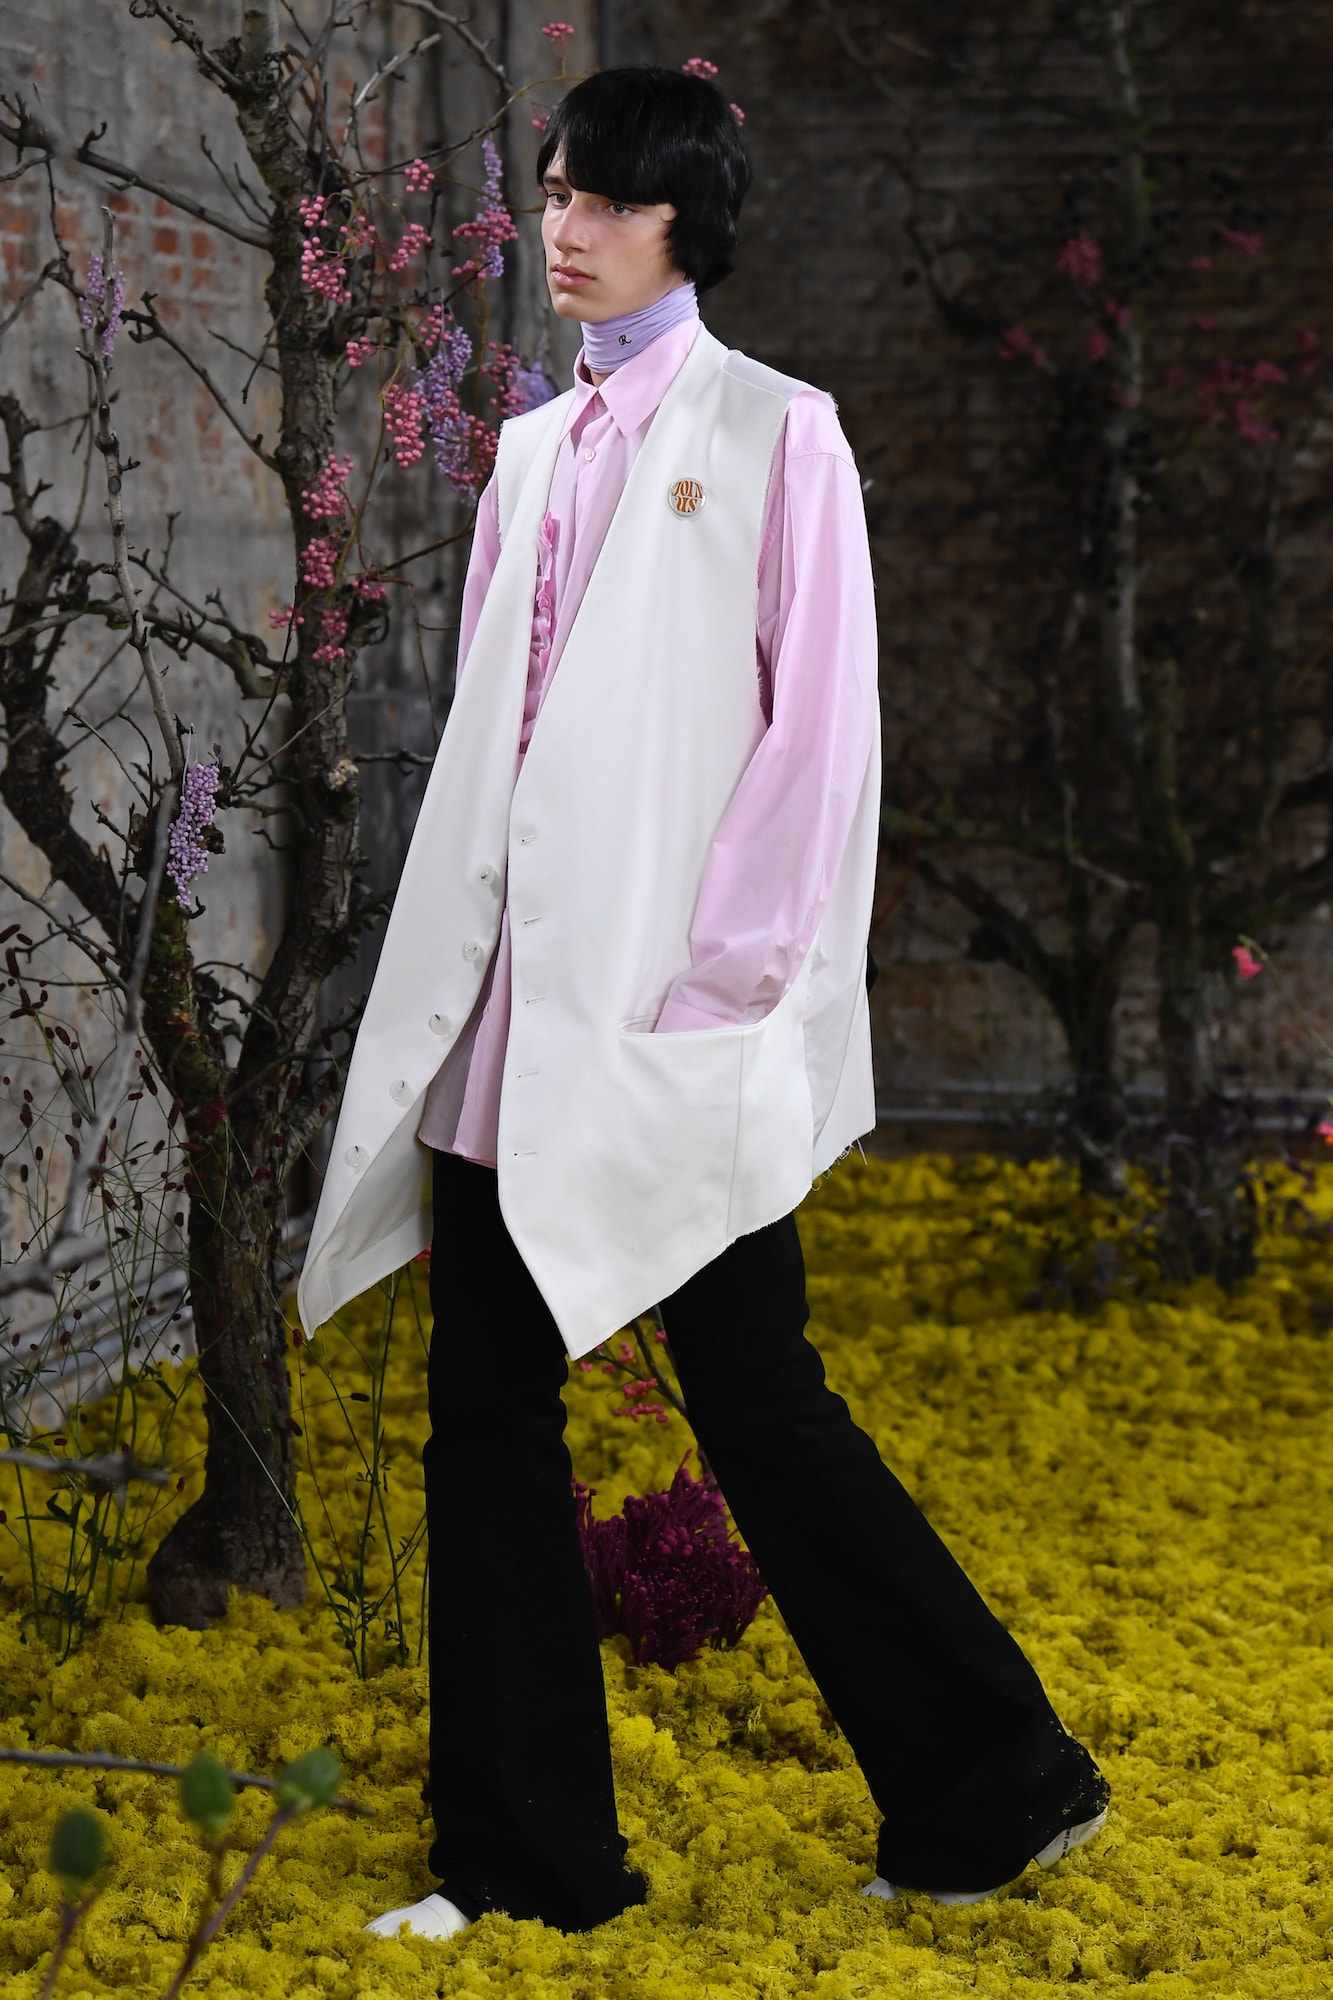 Raf Simons Womenswear Collection "Teenage Dream" Menswear Spring Summer 2021 